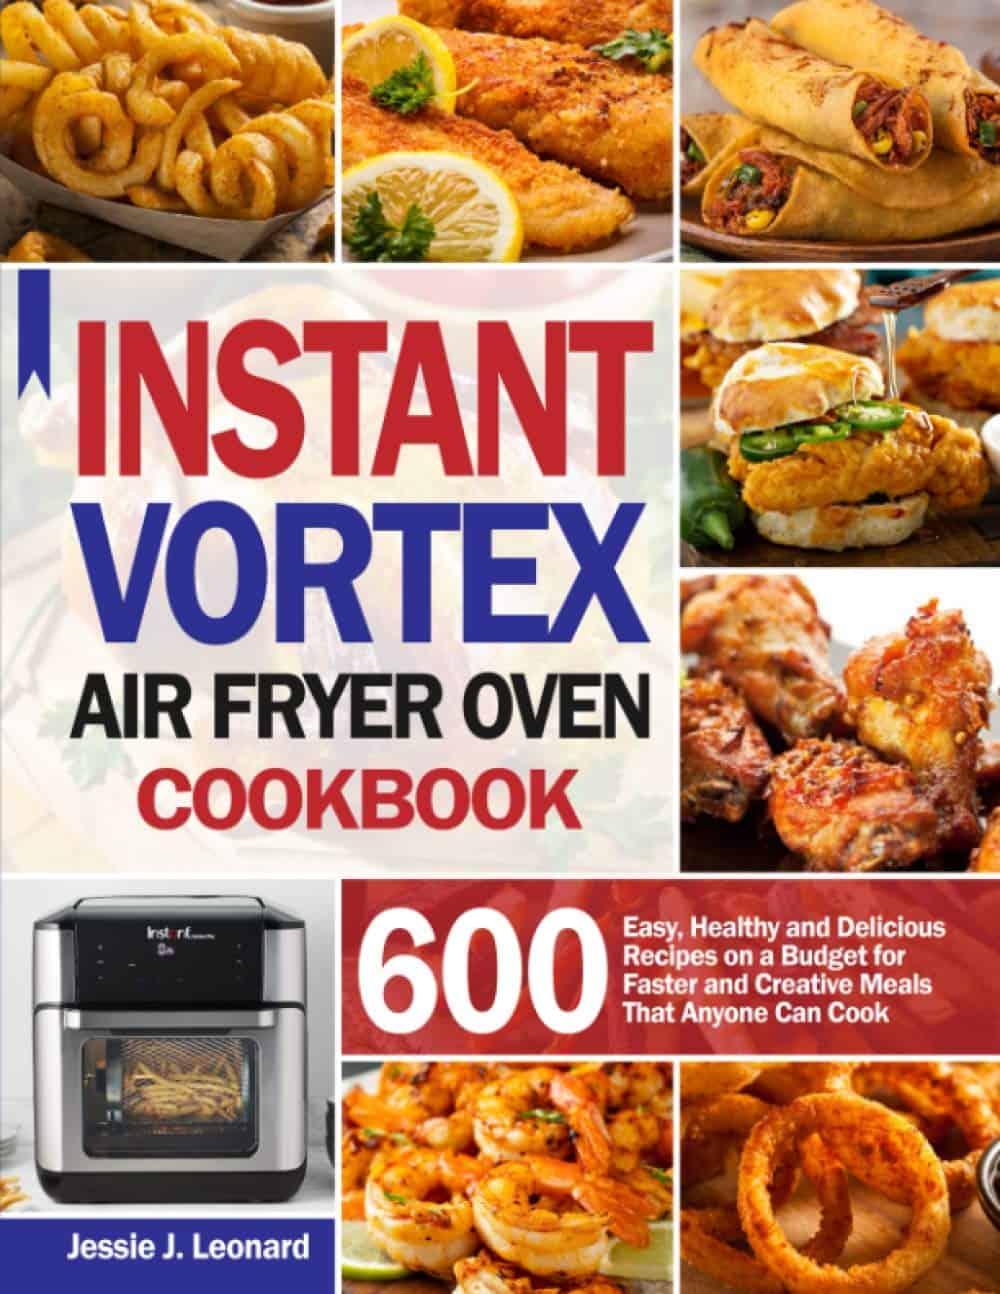 Great Cookbooks for the Instant Vortex Plus Air Fryer Vortex Recipes